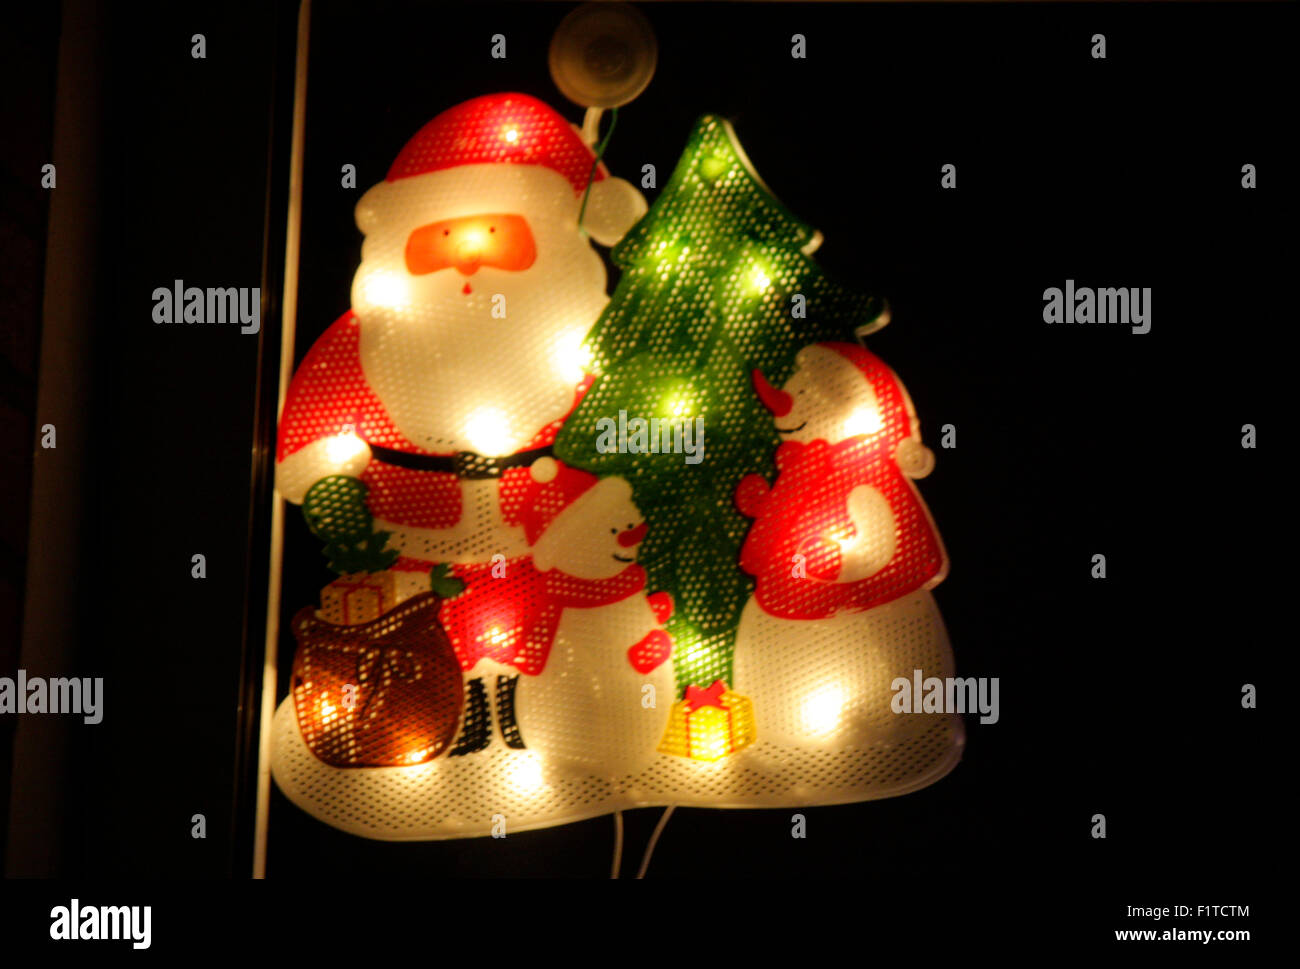 Weihnachtsmann, November 2013, Berlin. Stock Photo